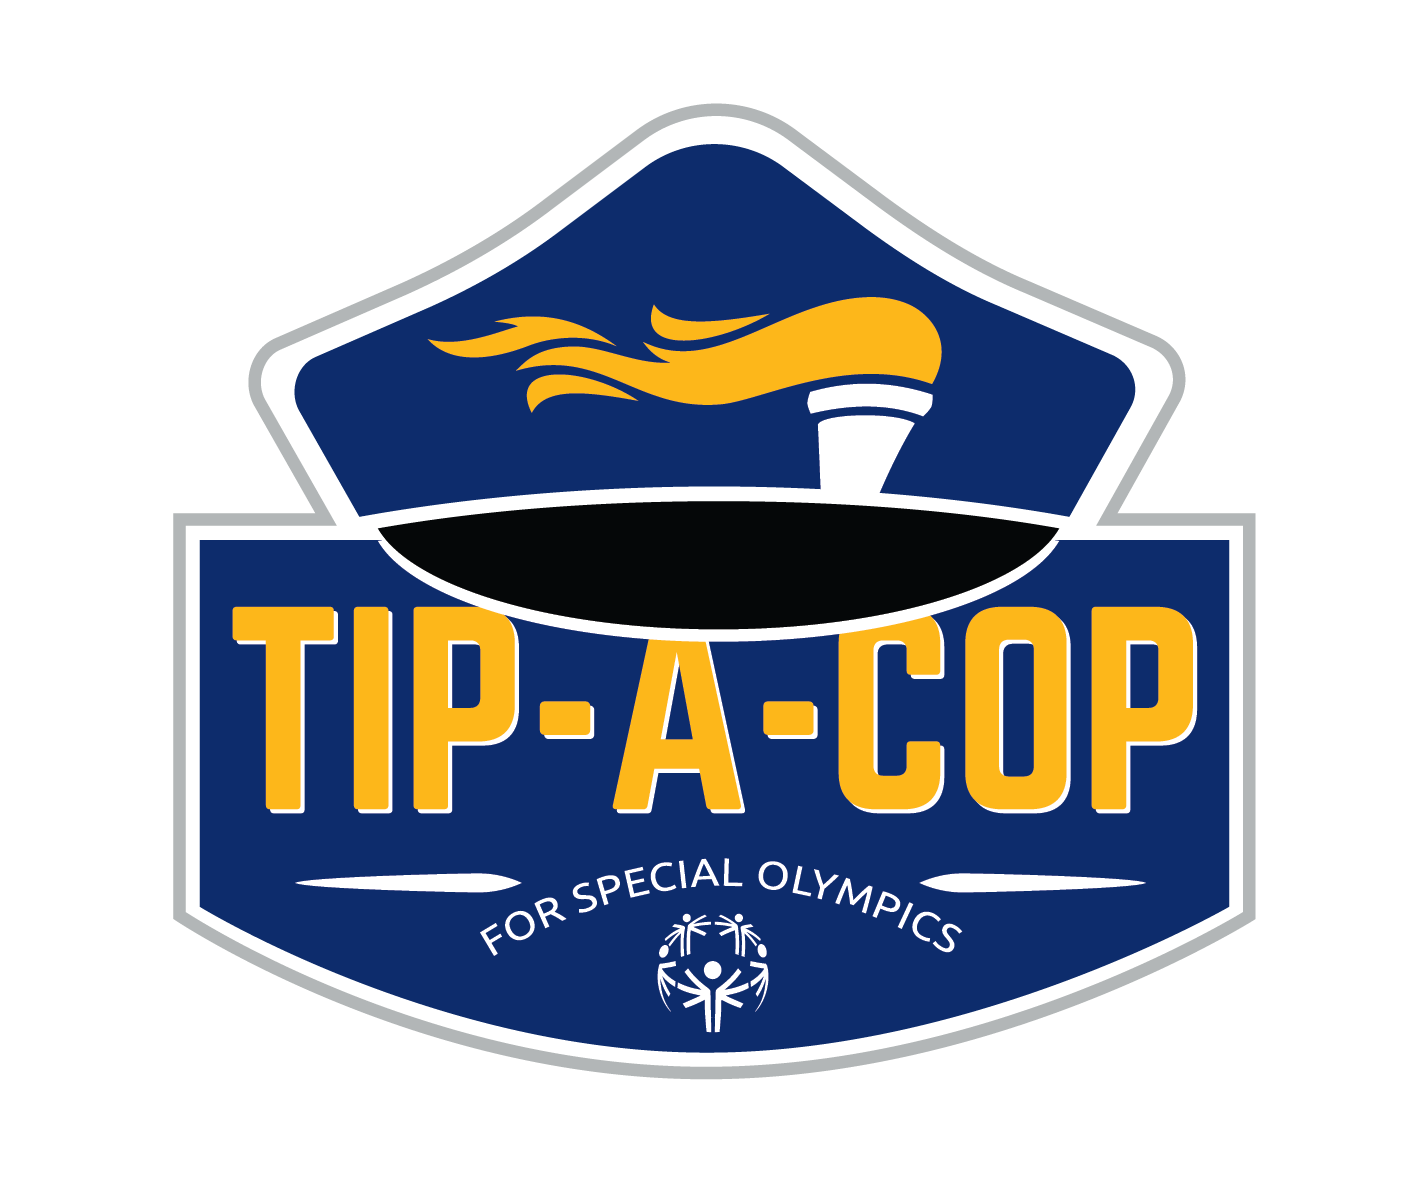 Tip-a-Cop